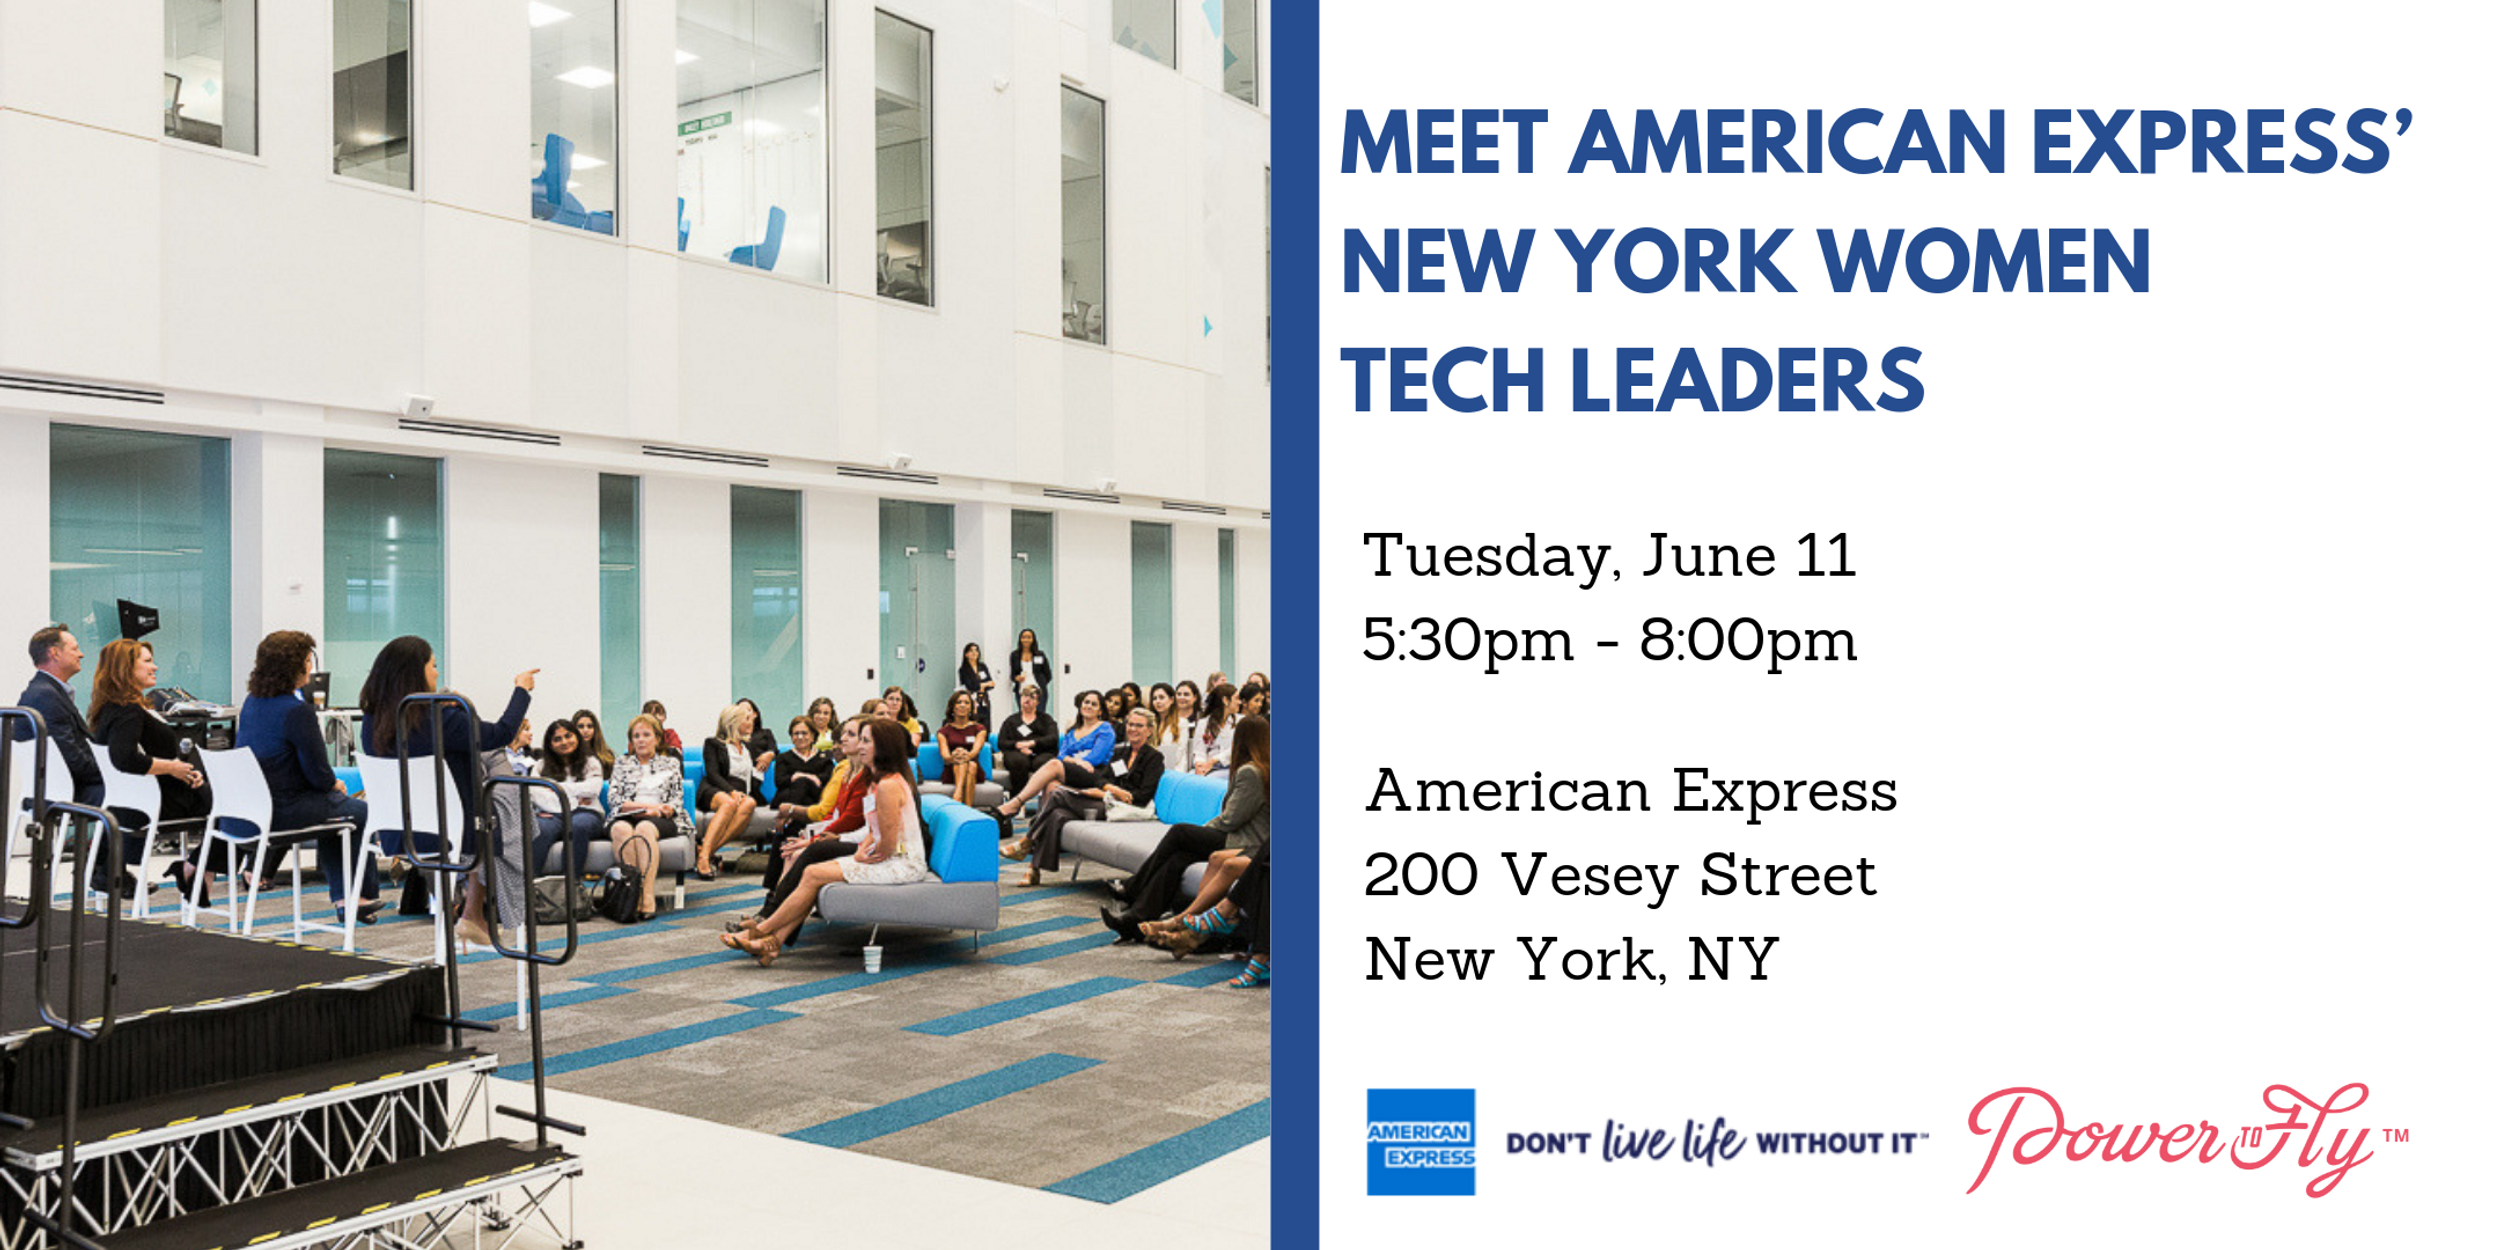 Meet American Express’ Women Tech Leaders in New York